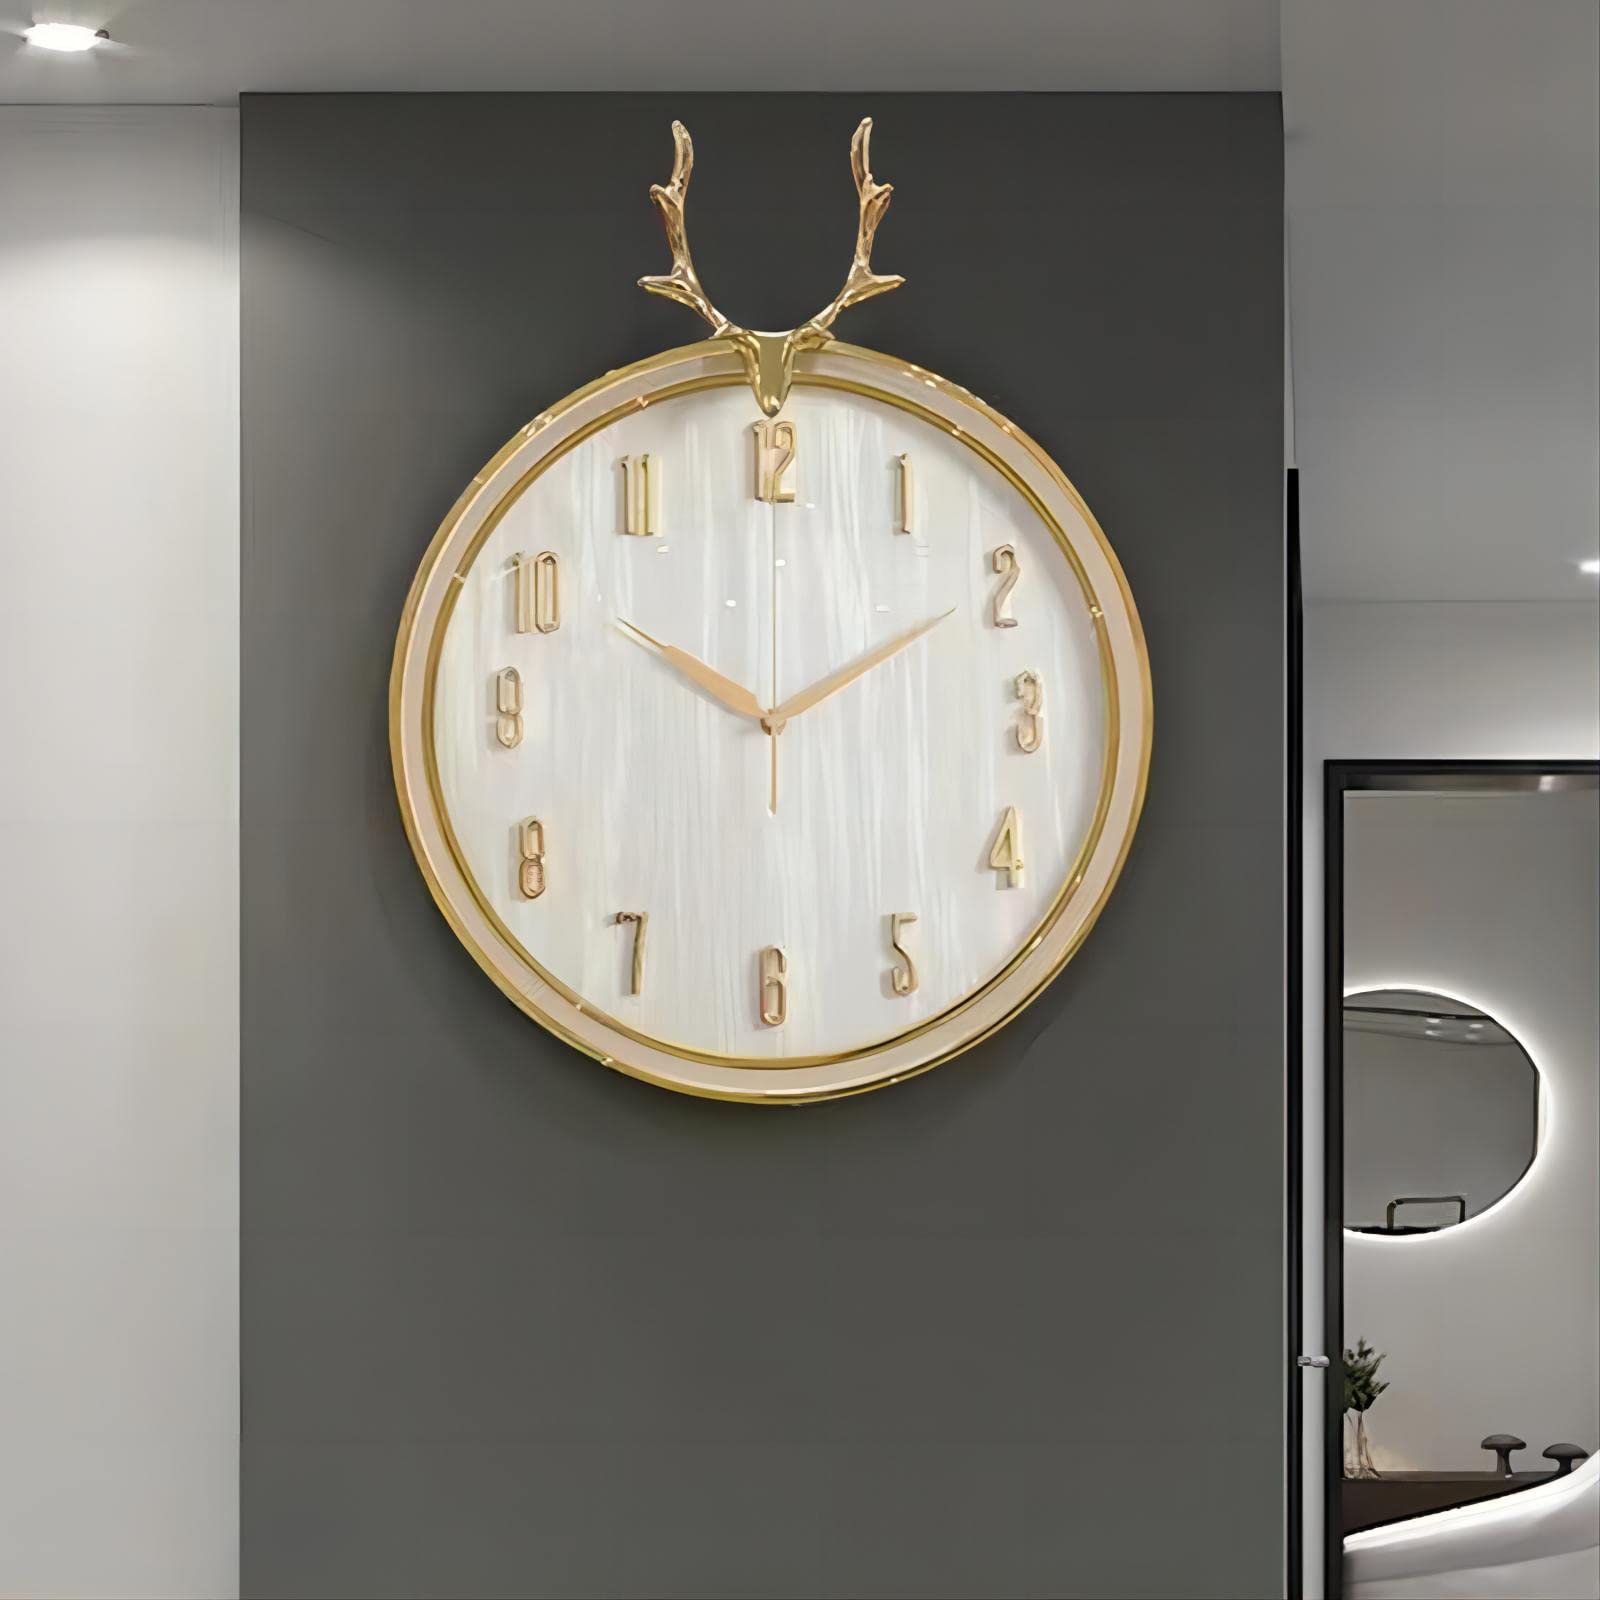 ZBCGWRI ゴールド 枝角 壁掛け時計 リビングルーム装飾 モダン 寝室 ゴールド壁掛け時計 電池